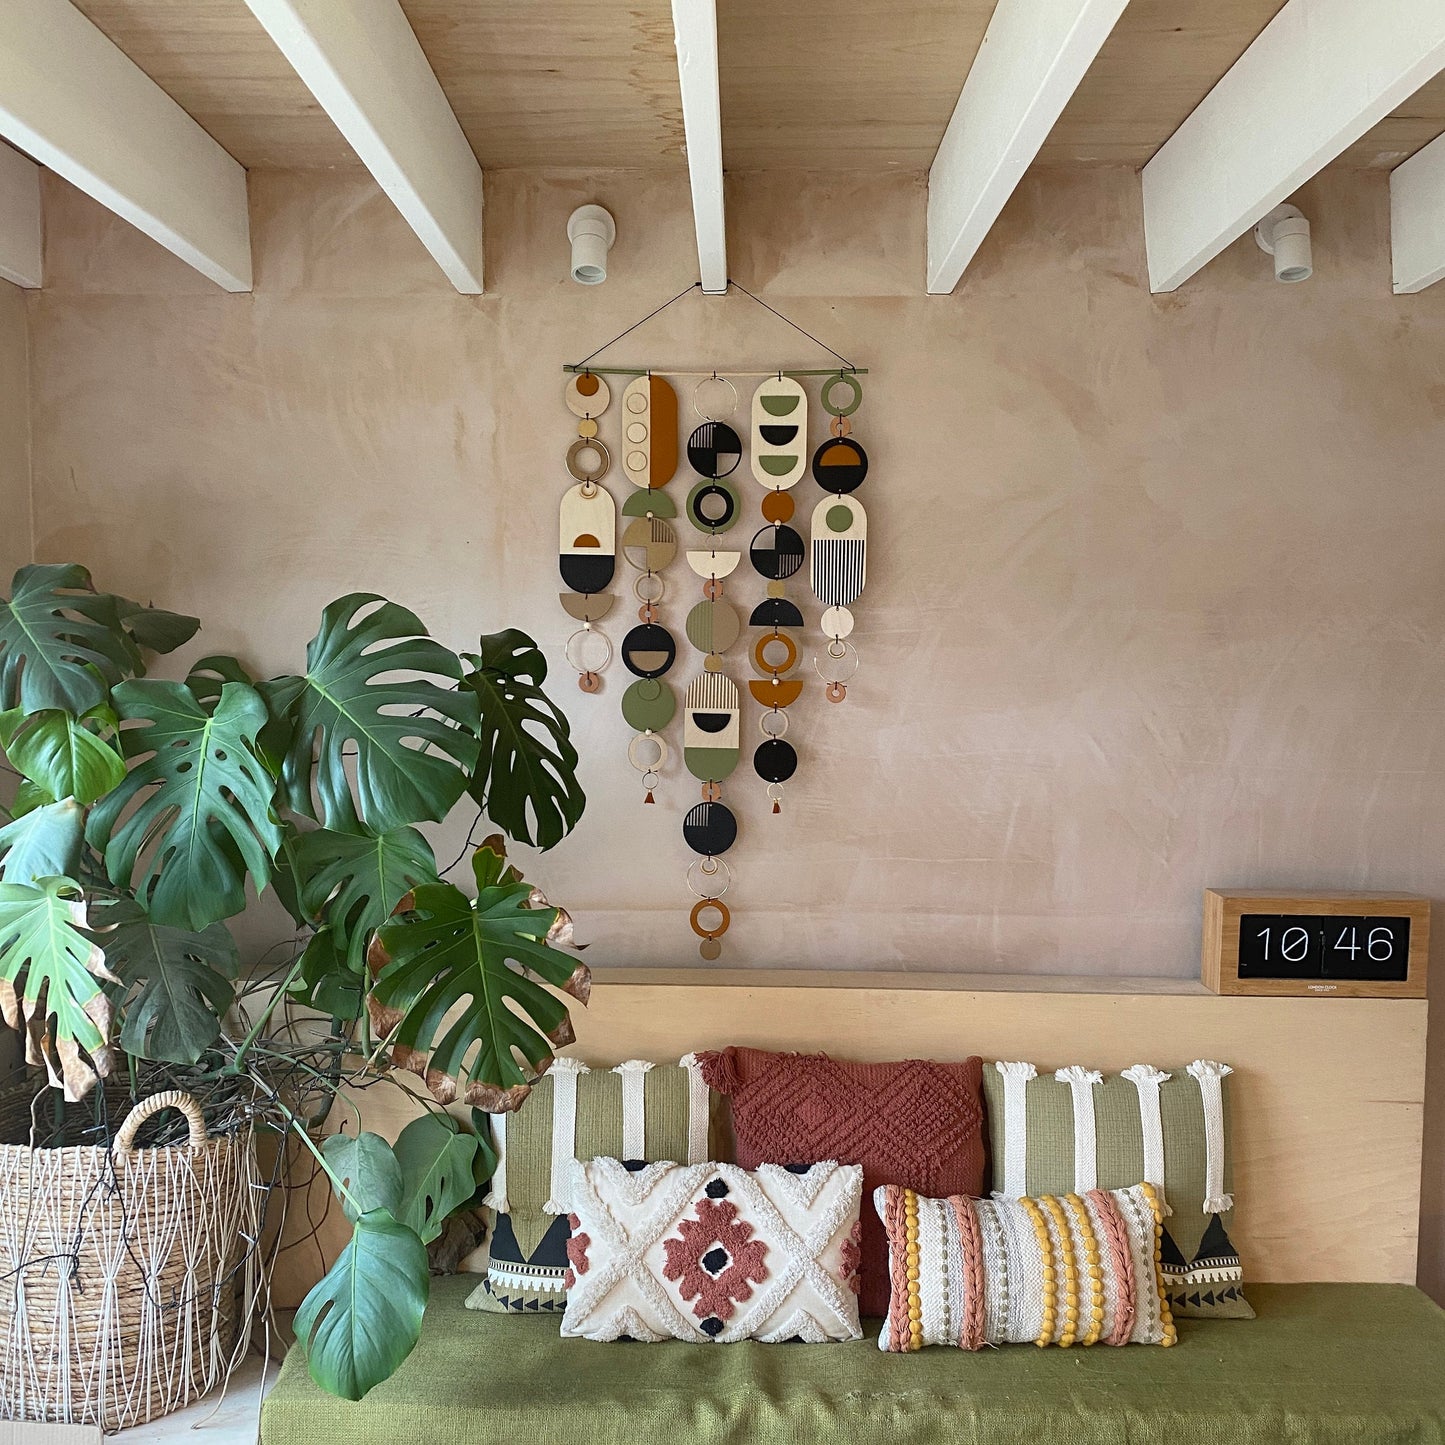 Modern Art Wooden Wall Hanging - Home Decor - DESIGN AWARDS 2022 Winner - Contemporary Wall Art - Wall Tapestry